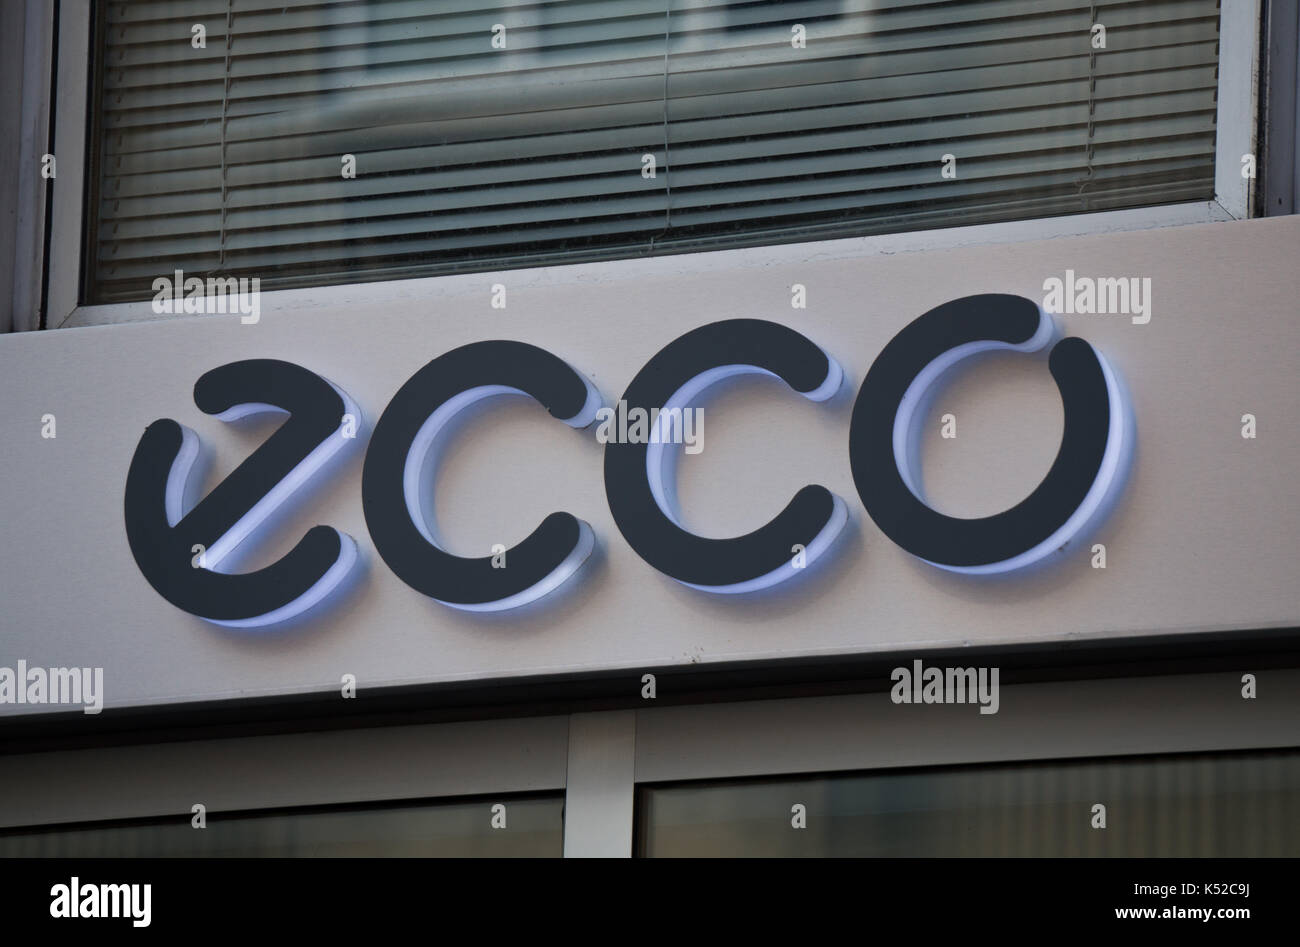 Ljubljana, Slovenia - July 23rd 2017: The ECCO logo above a store in Slovenia's capital Stock Photo Alamy